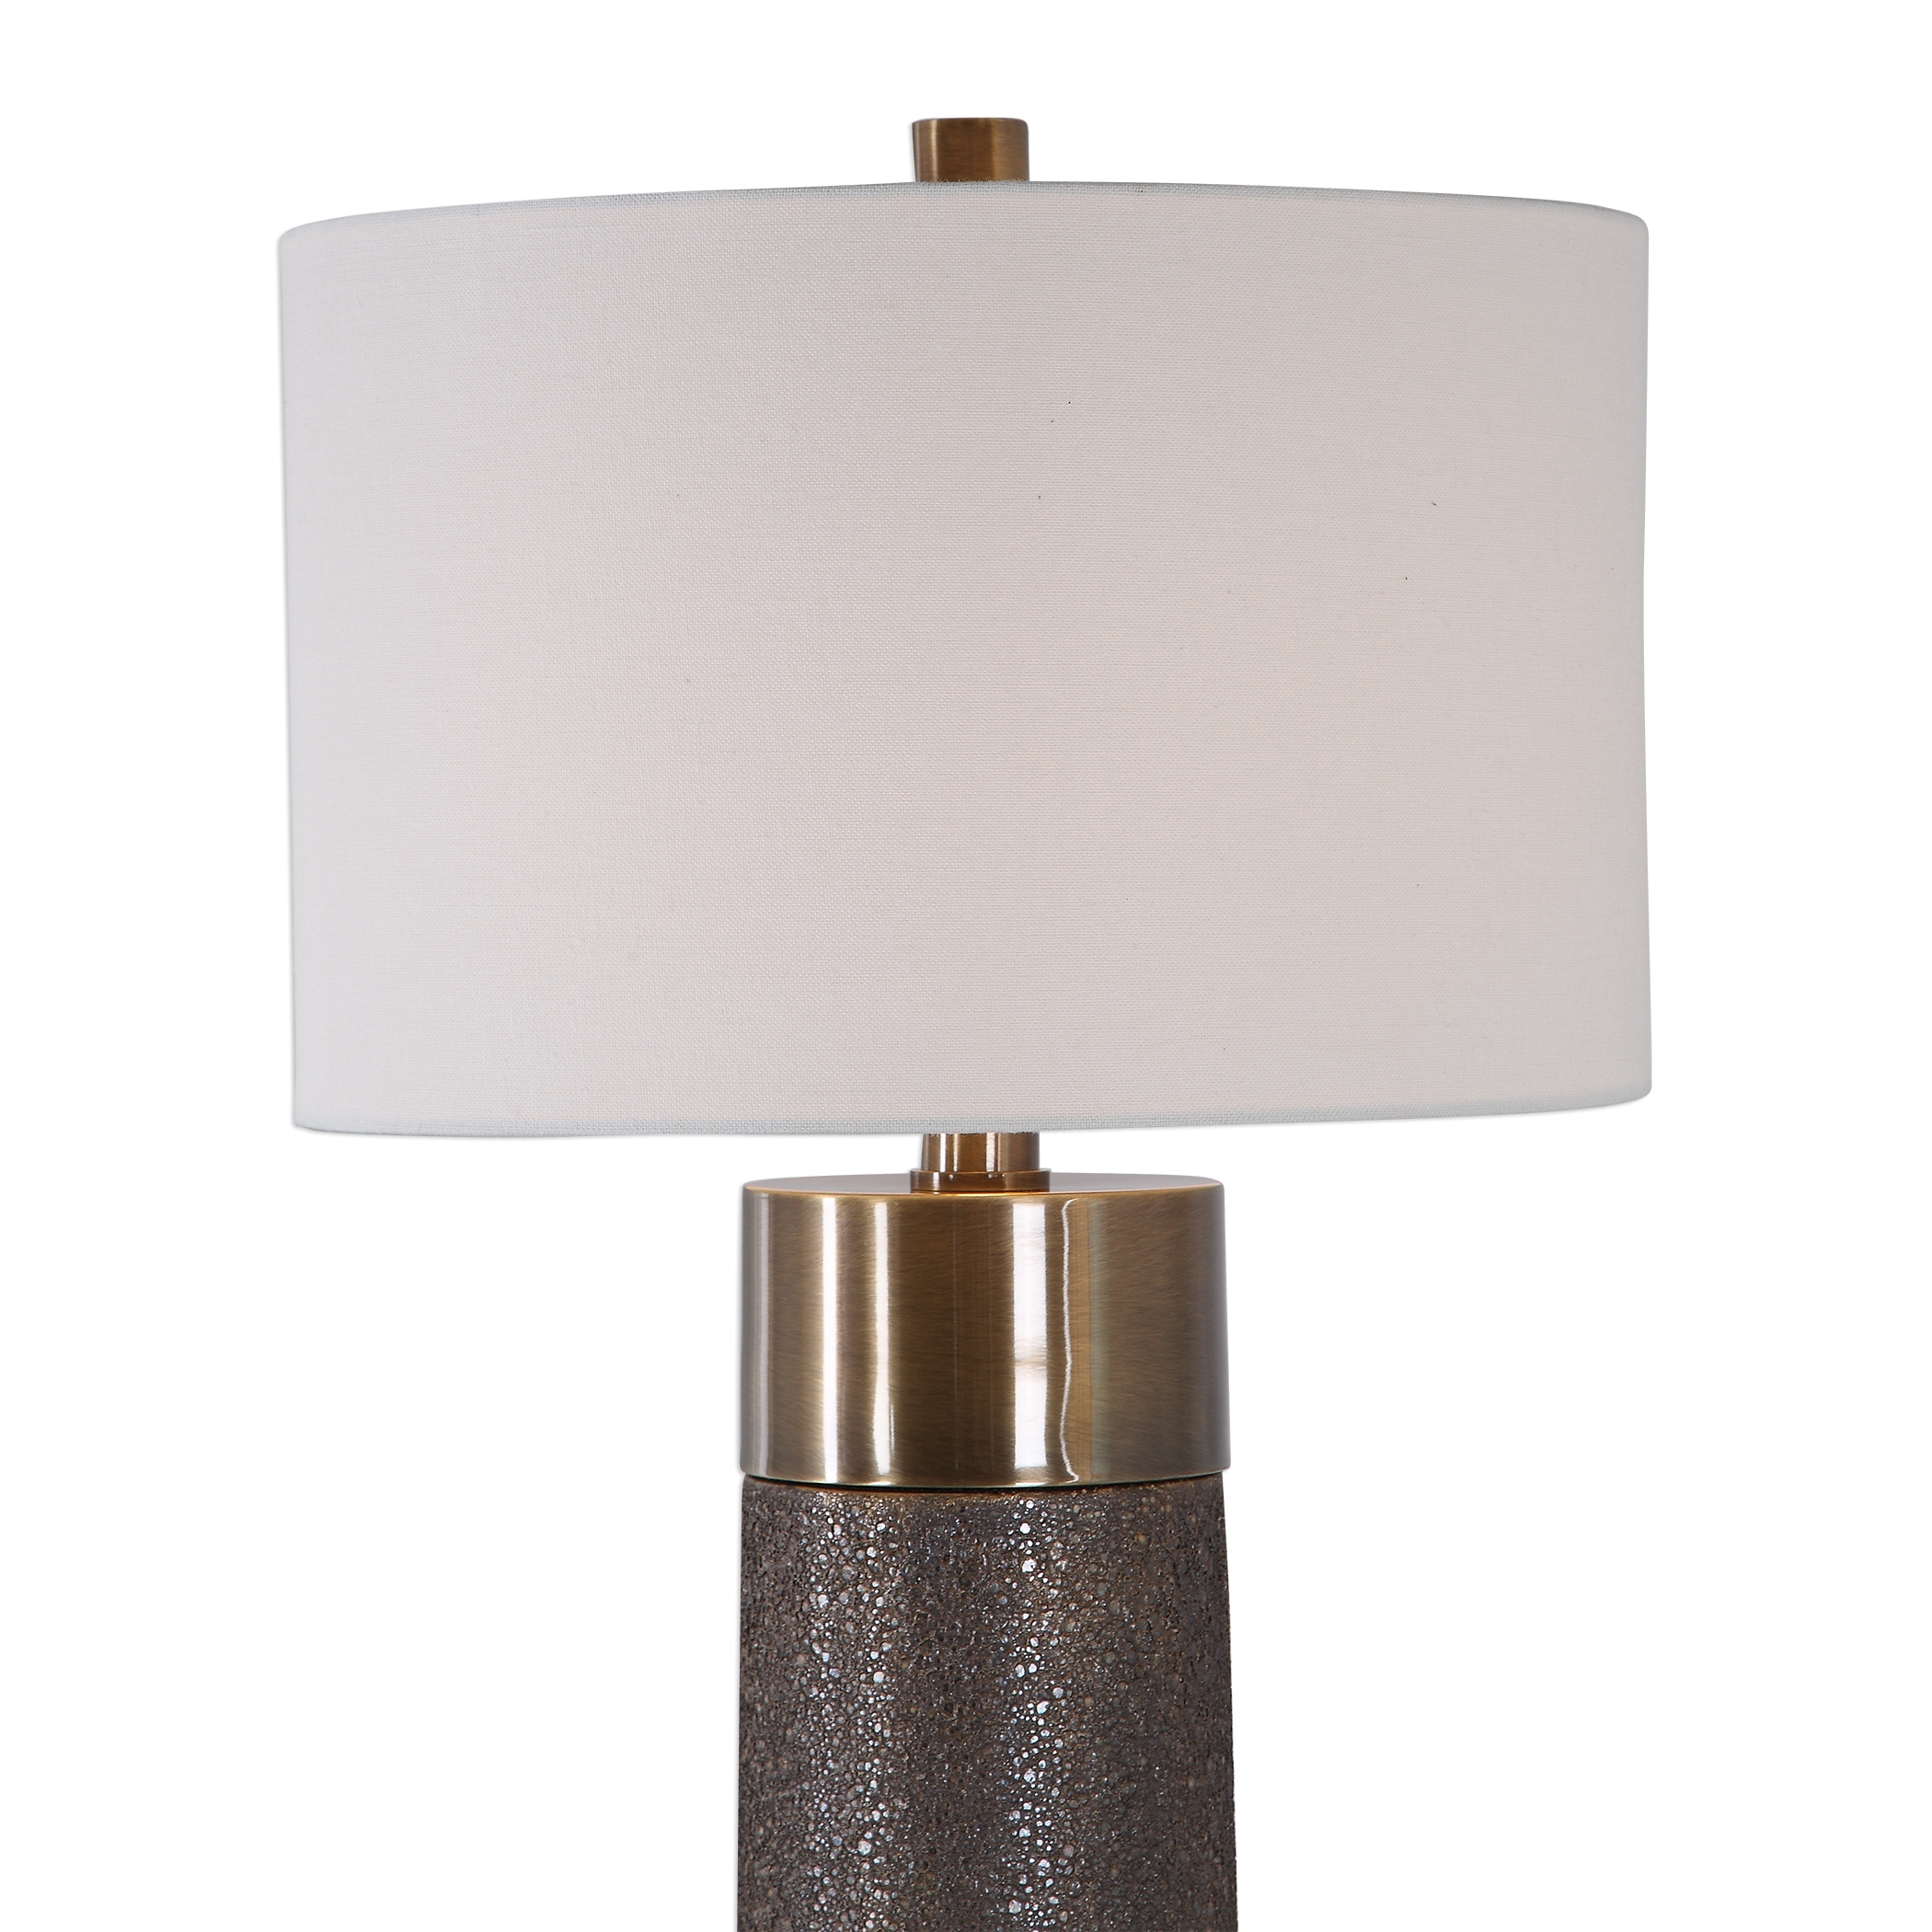 Brannock Bronze Table Lamp - Image 2